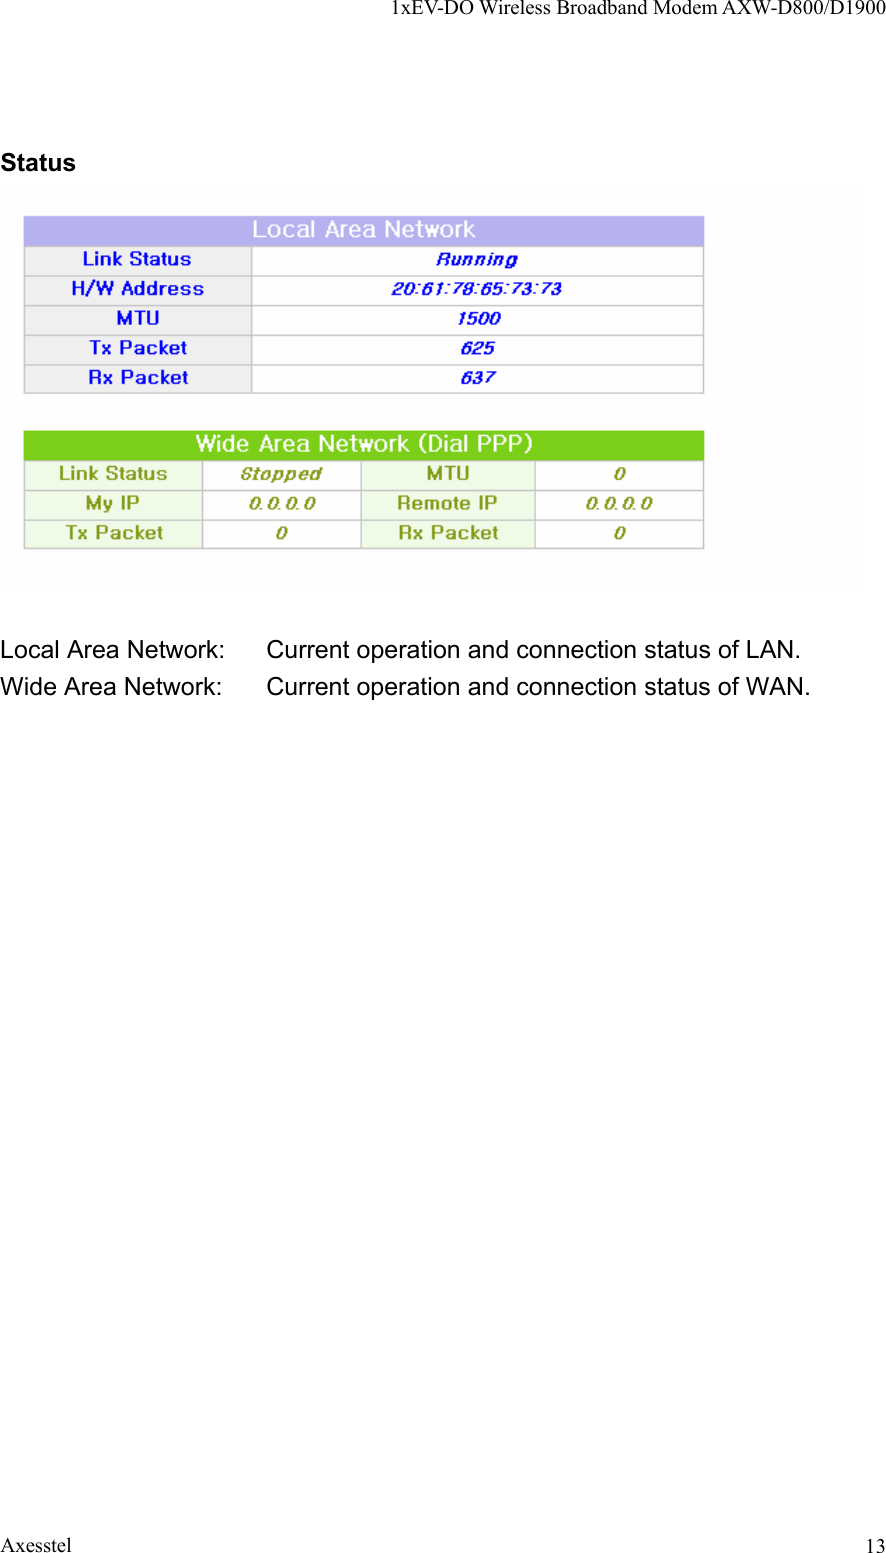 1xEV-DO Wireless Broadband Modem AXW-D800/D1900 Axesstel  13Status   Local Area Network:  Current operation and connection status of LAN. Wide Area Network:  Current operation and connection status of WAN.      